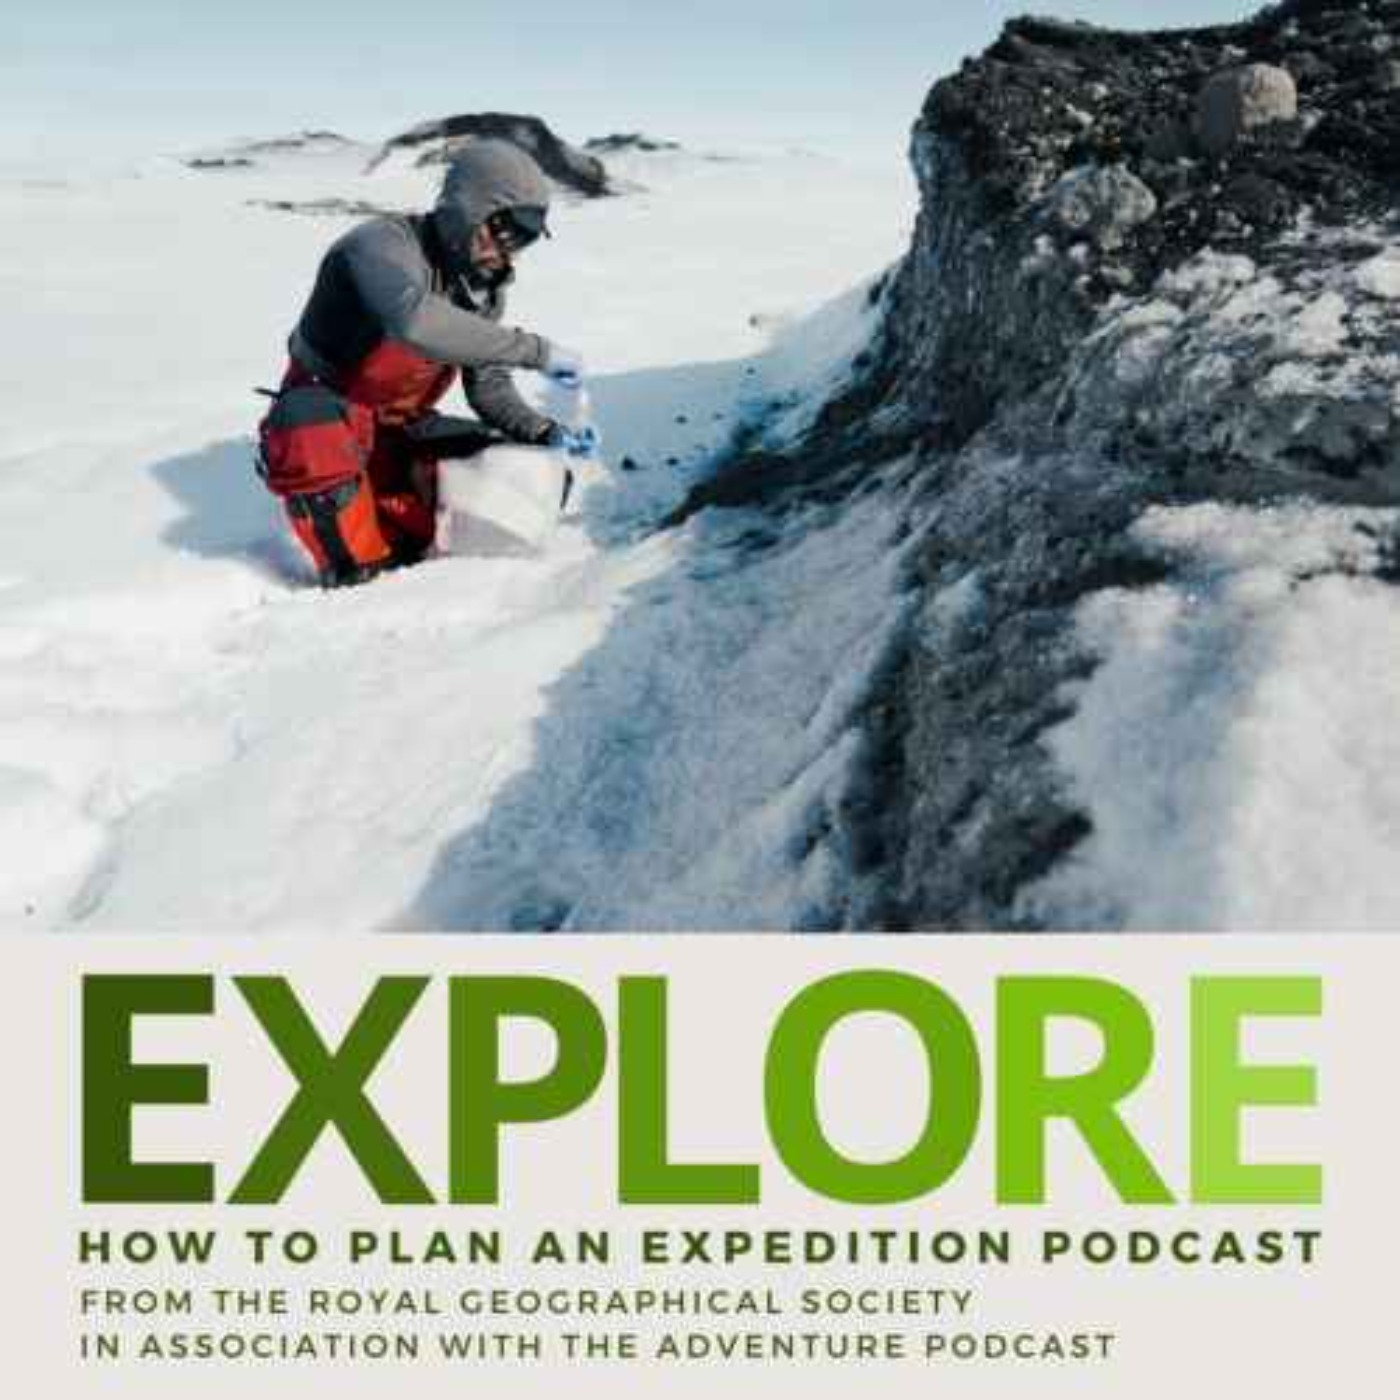 Explore 006: Camp Life, Polar